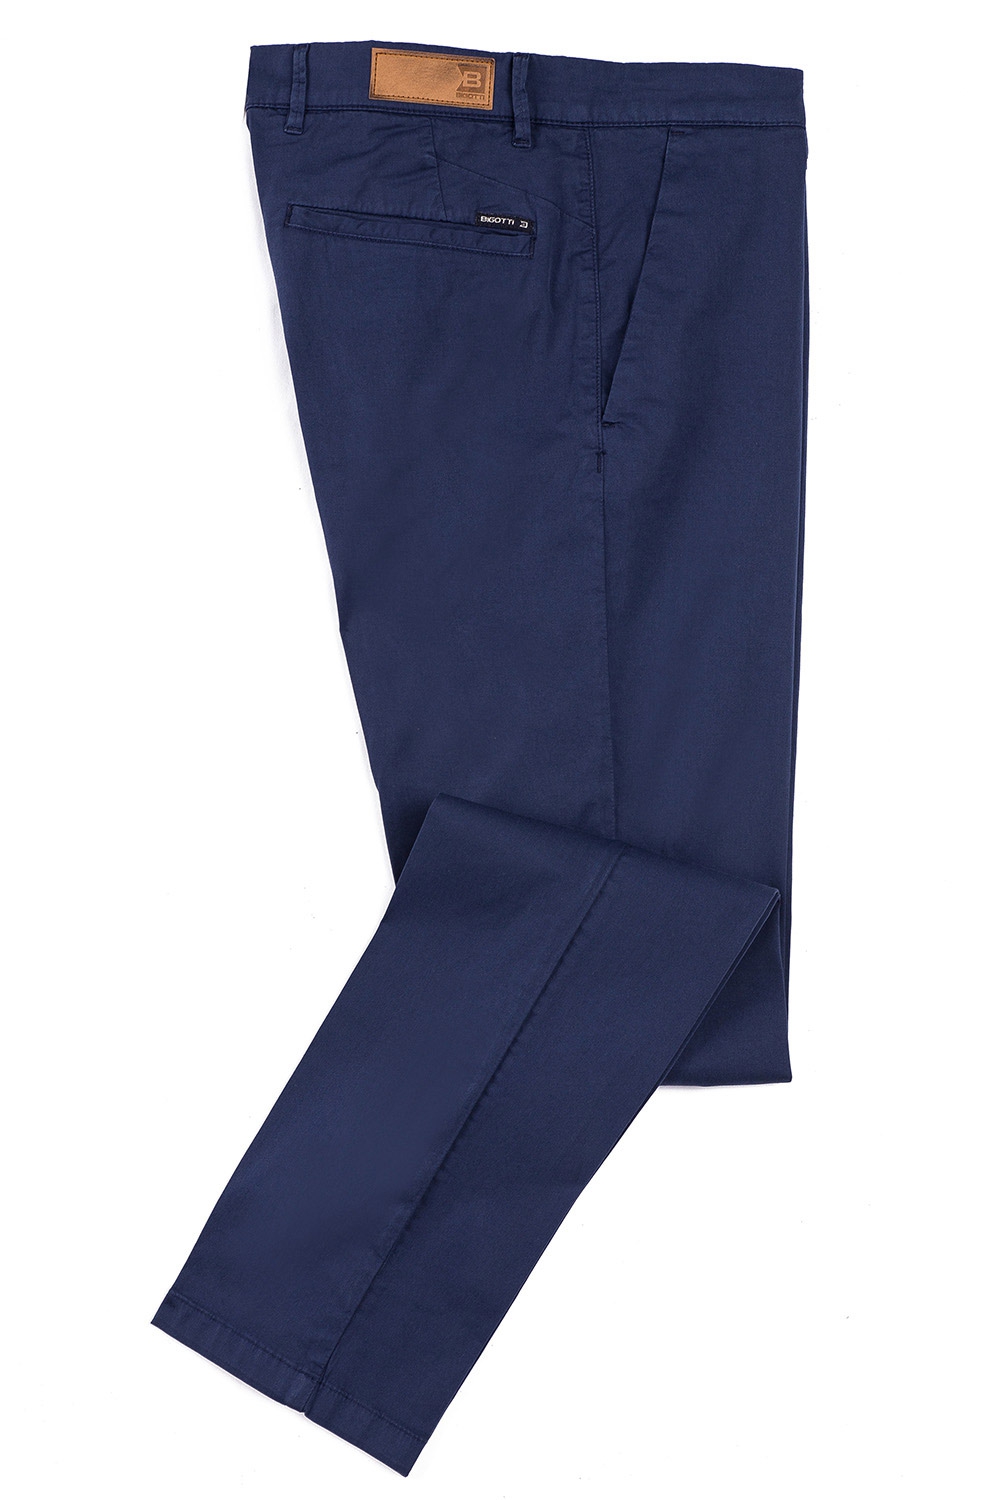 Pantaloni superslim trento bleumarin uni 1